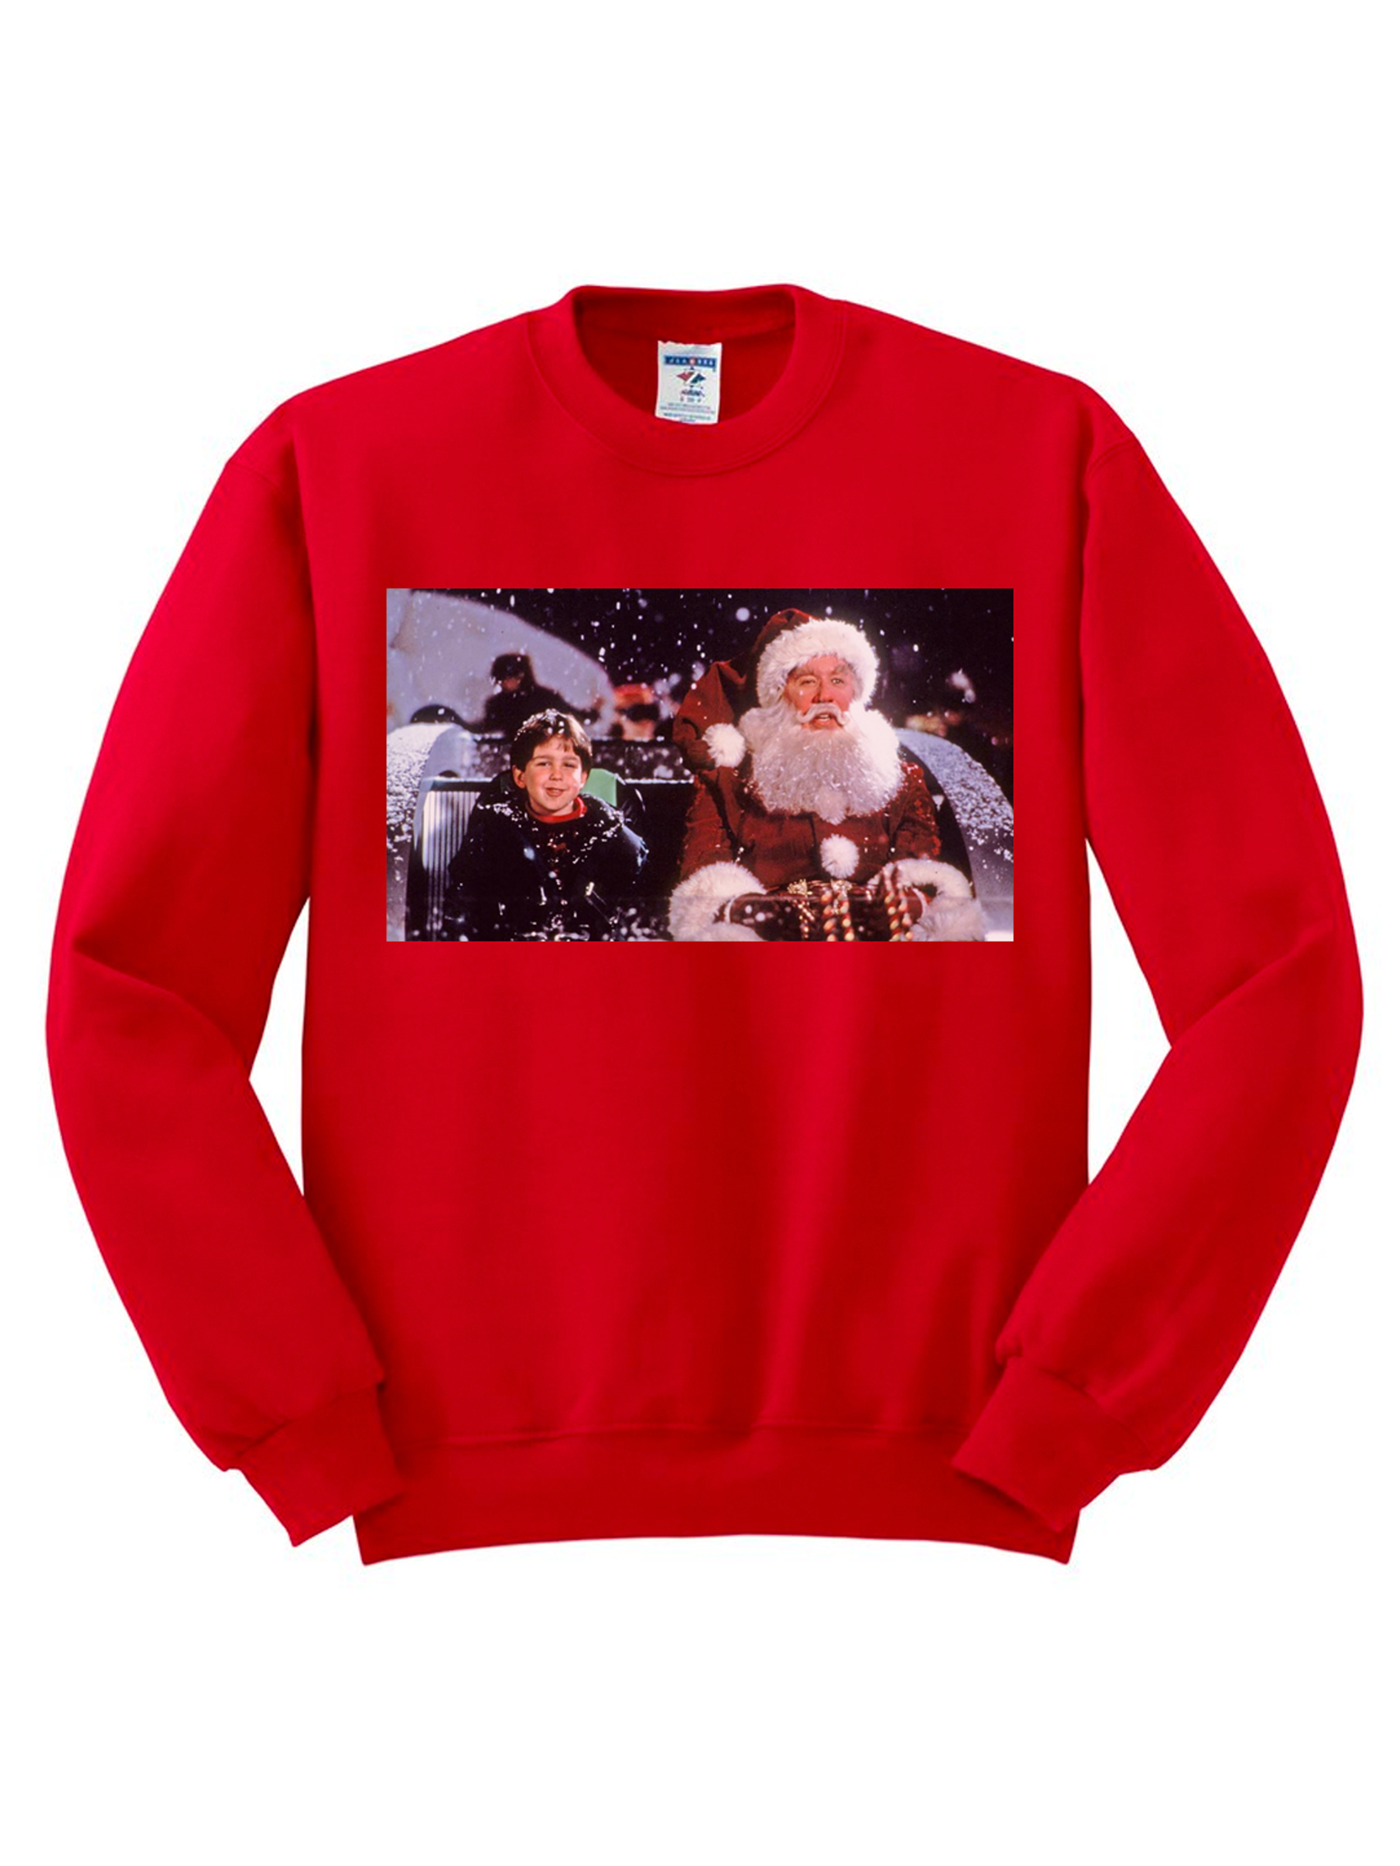 I Believe In Santa Claus Tee/Sweatshirt